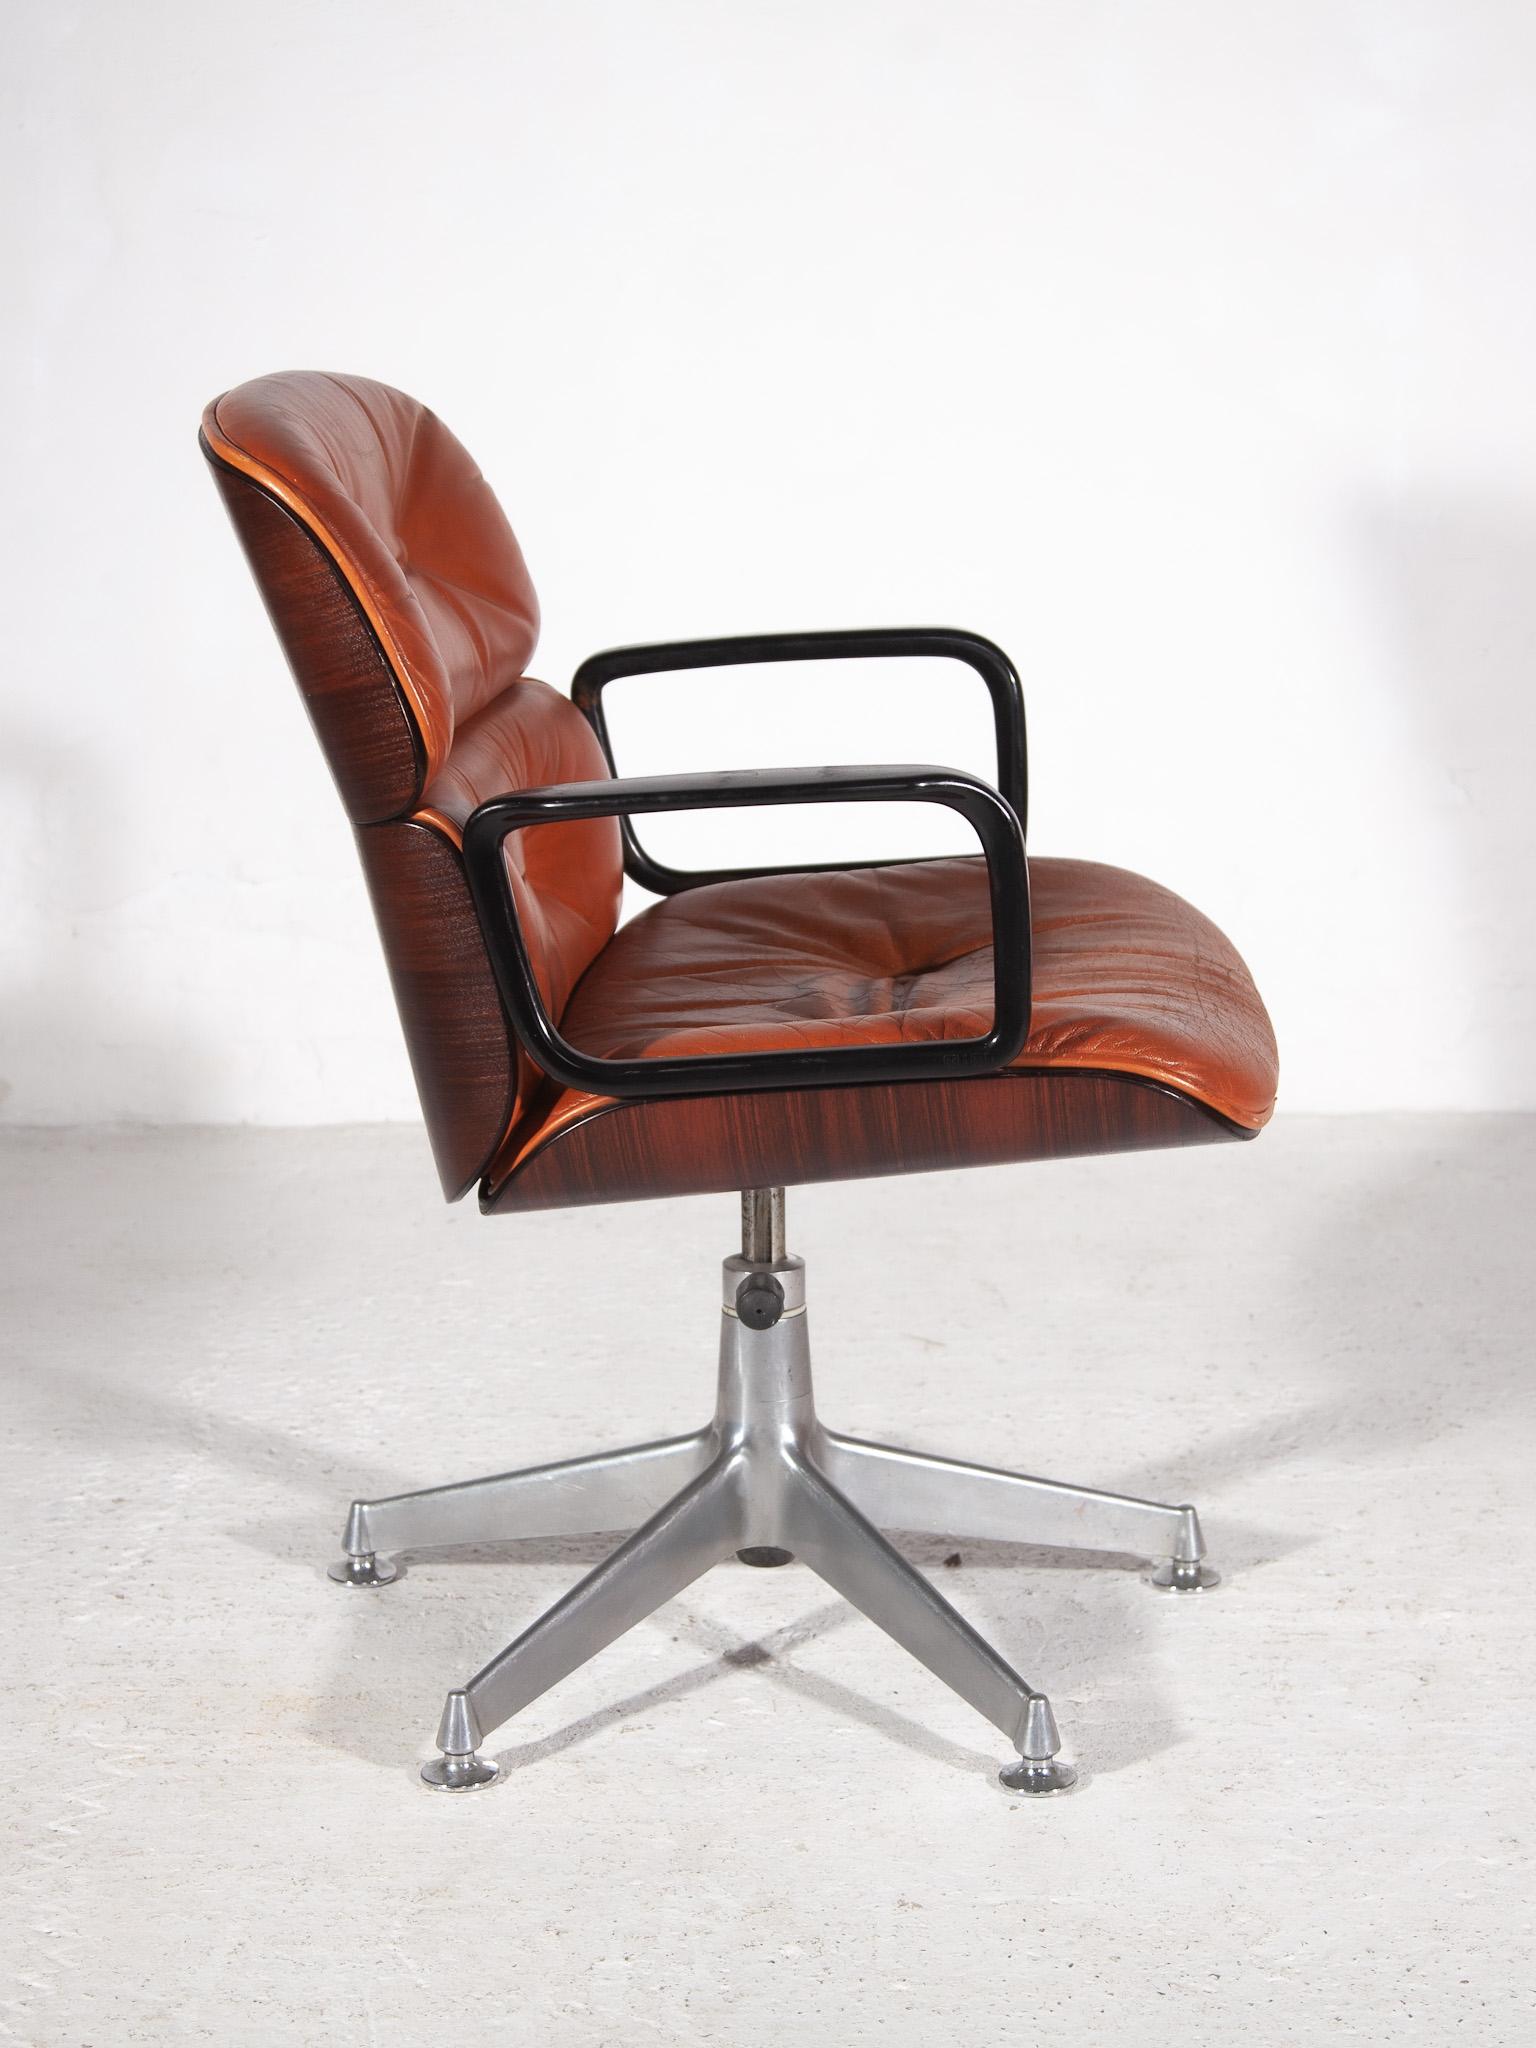 Rare Executive Arm Desk Chair for Mobli Italiani Moderni, Rome 2